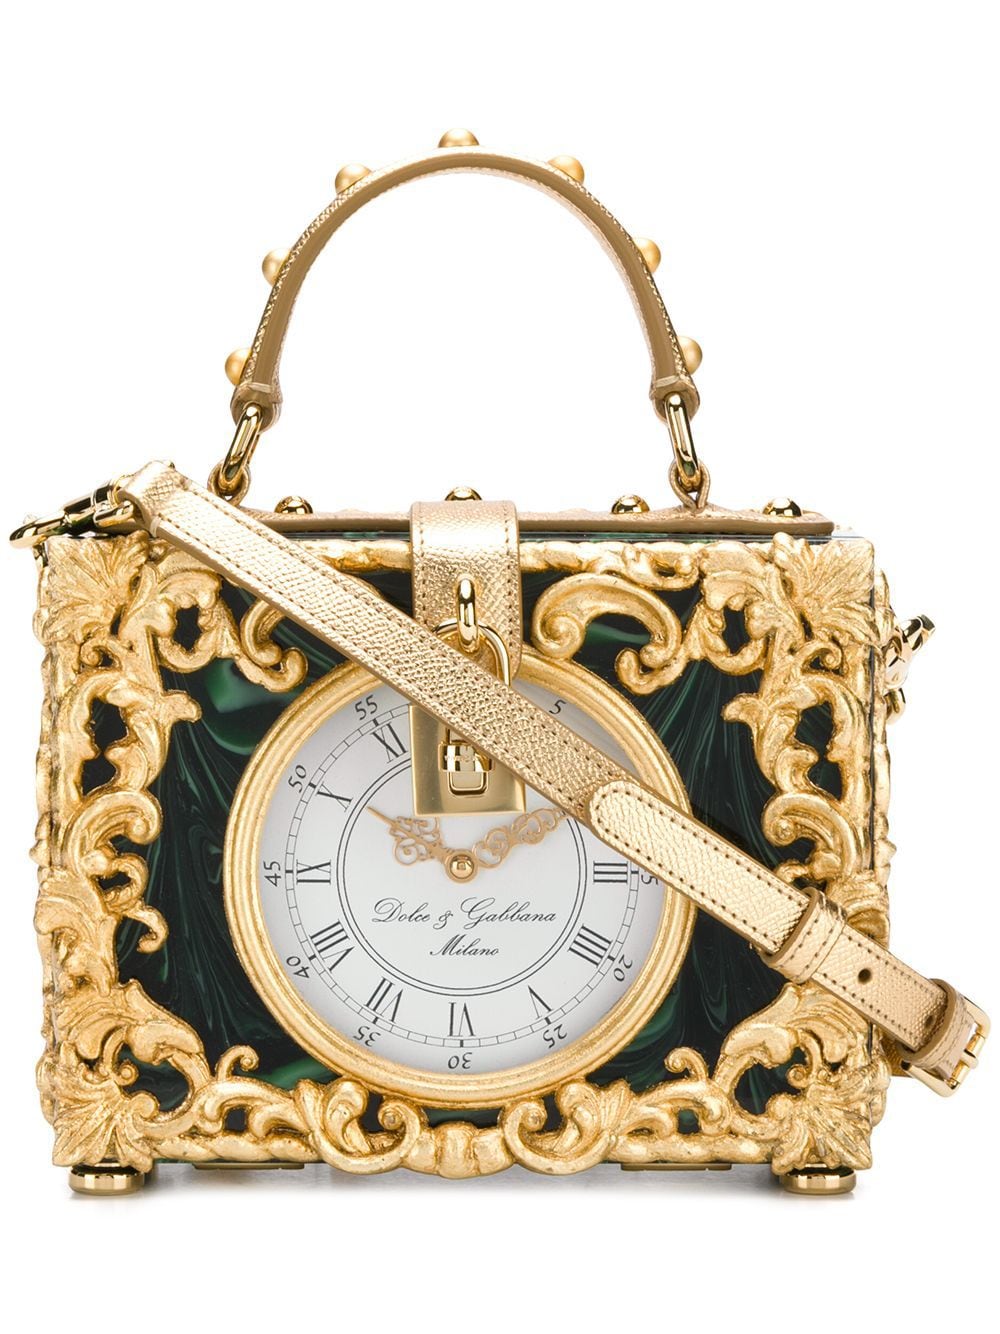 фото Dolce & gabbana сумка box orologio barocco